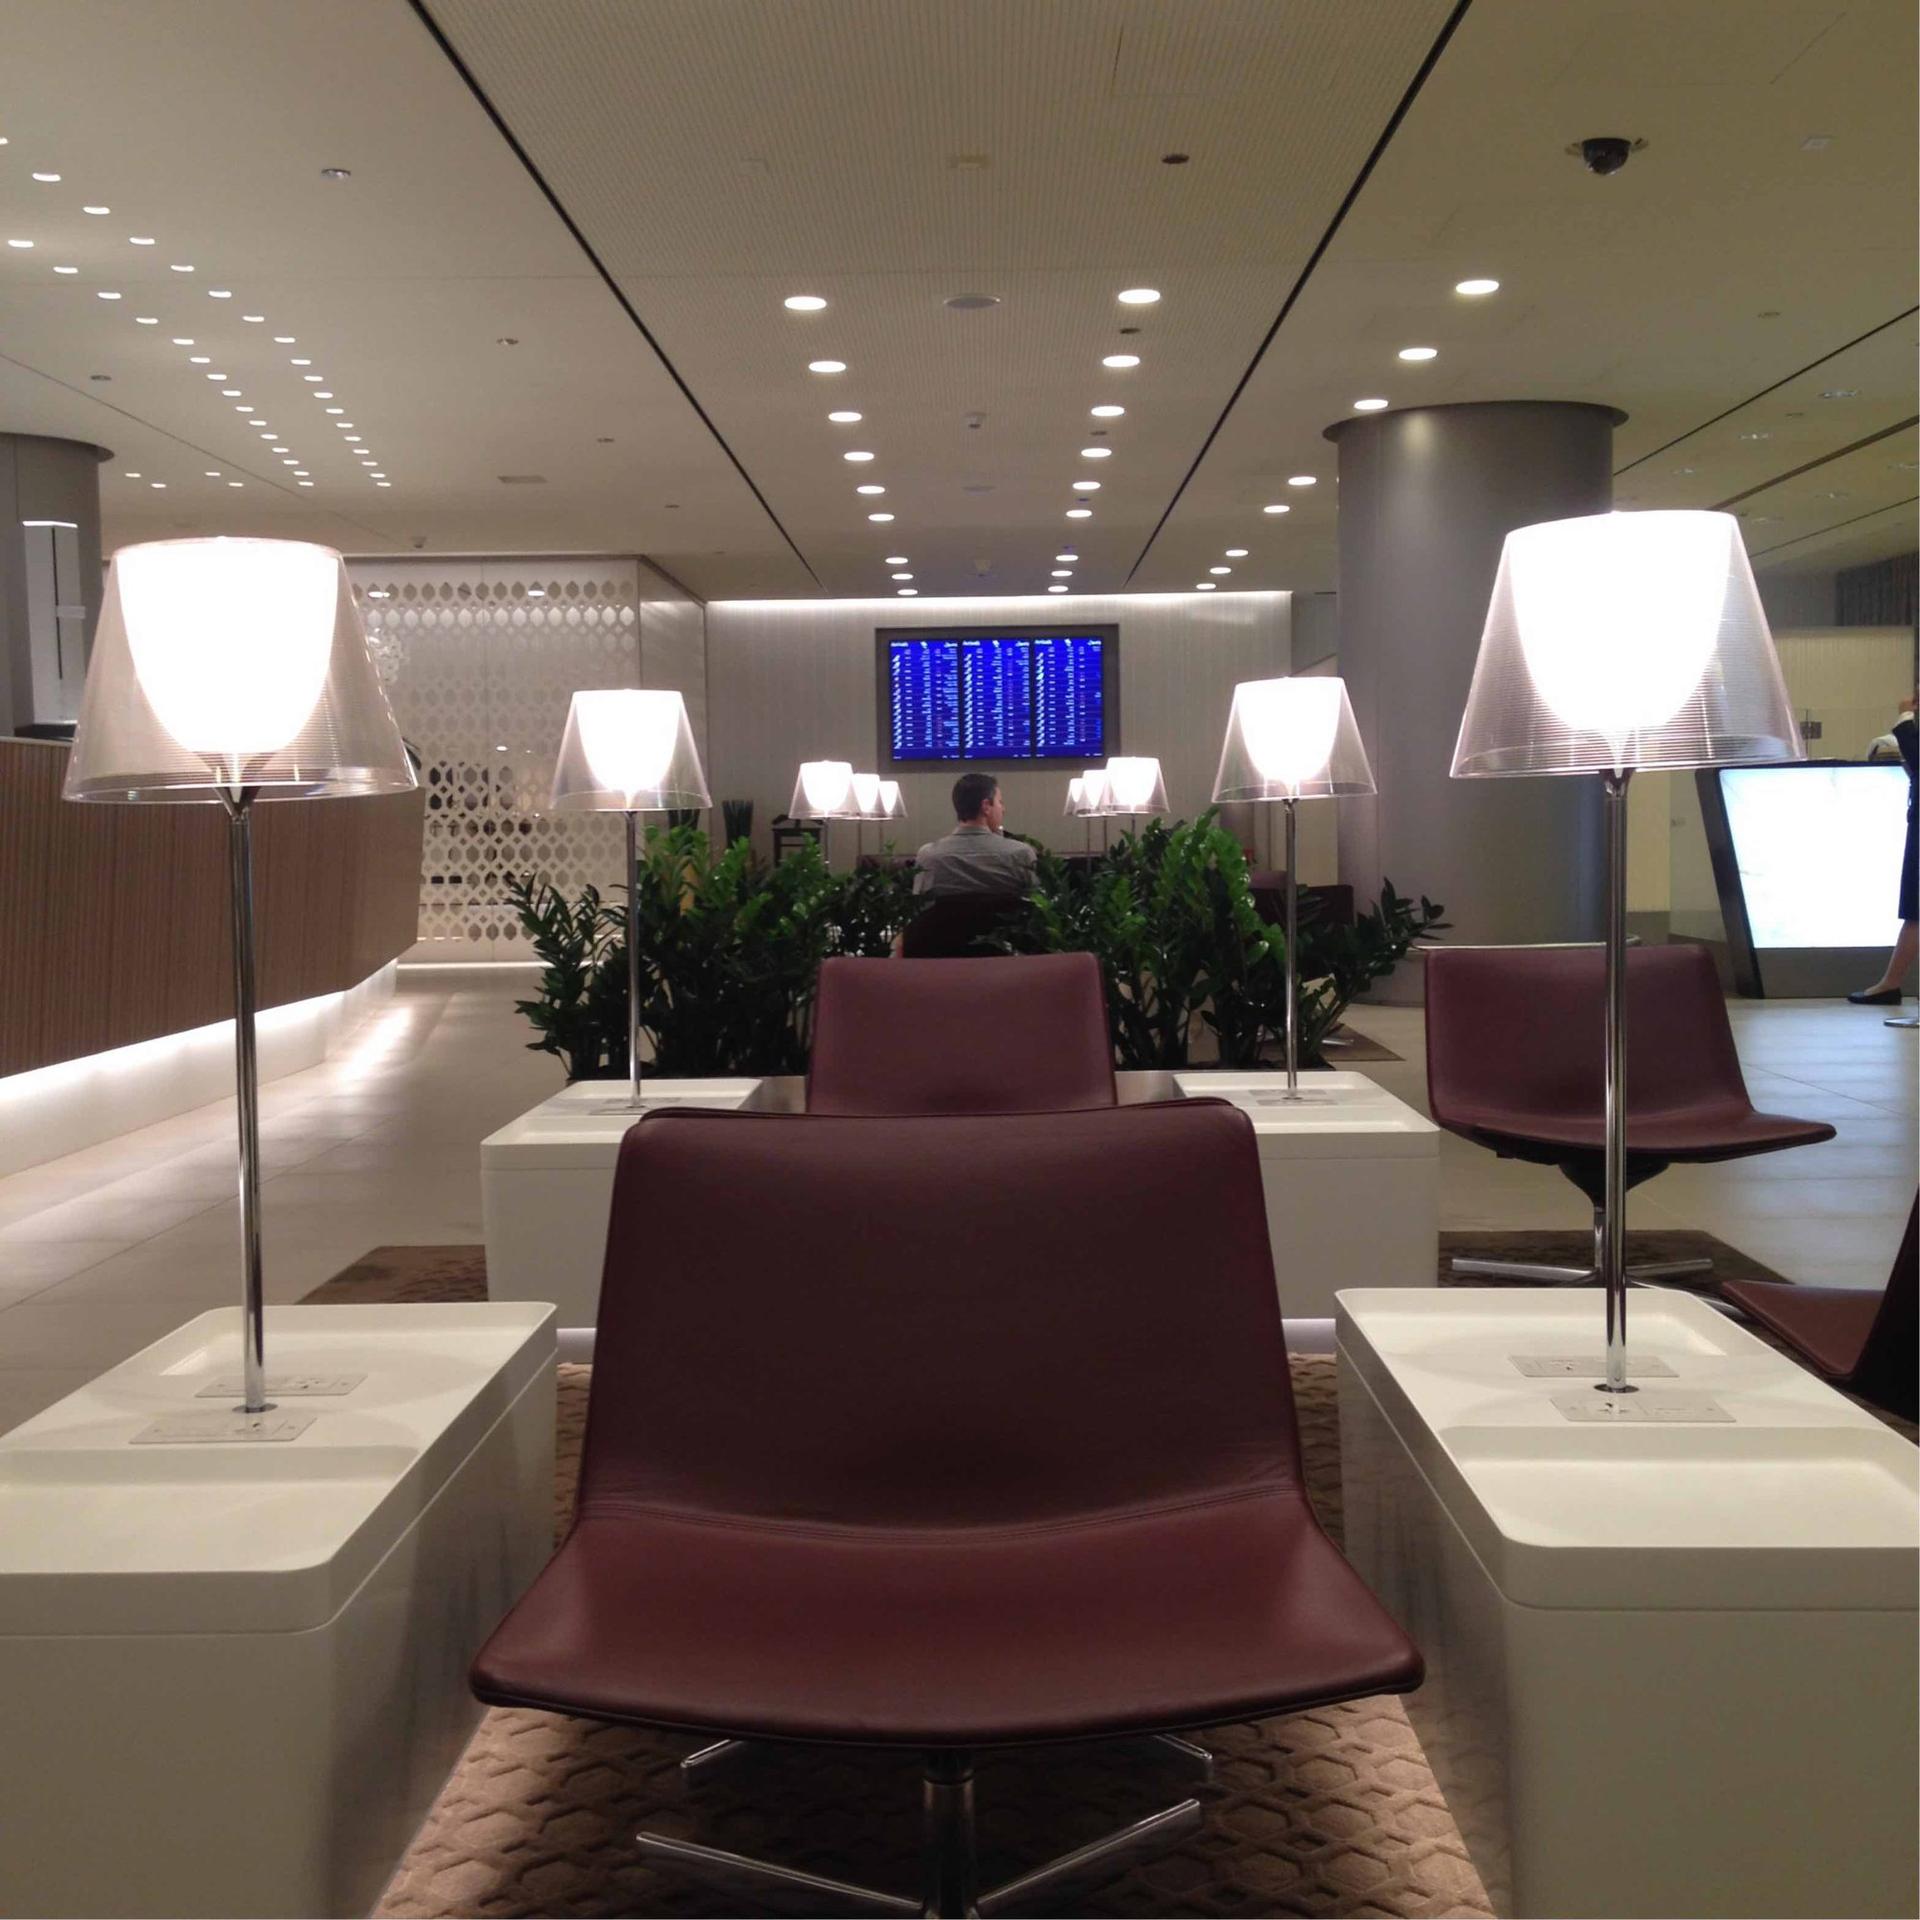 Al Maha Arrival Lounge image 1 of 3